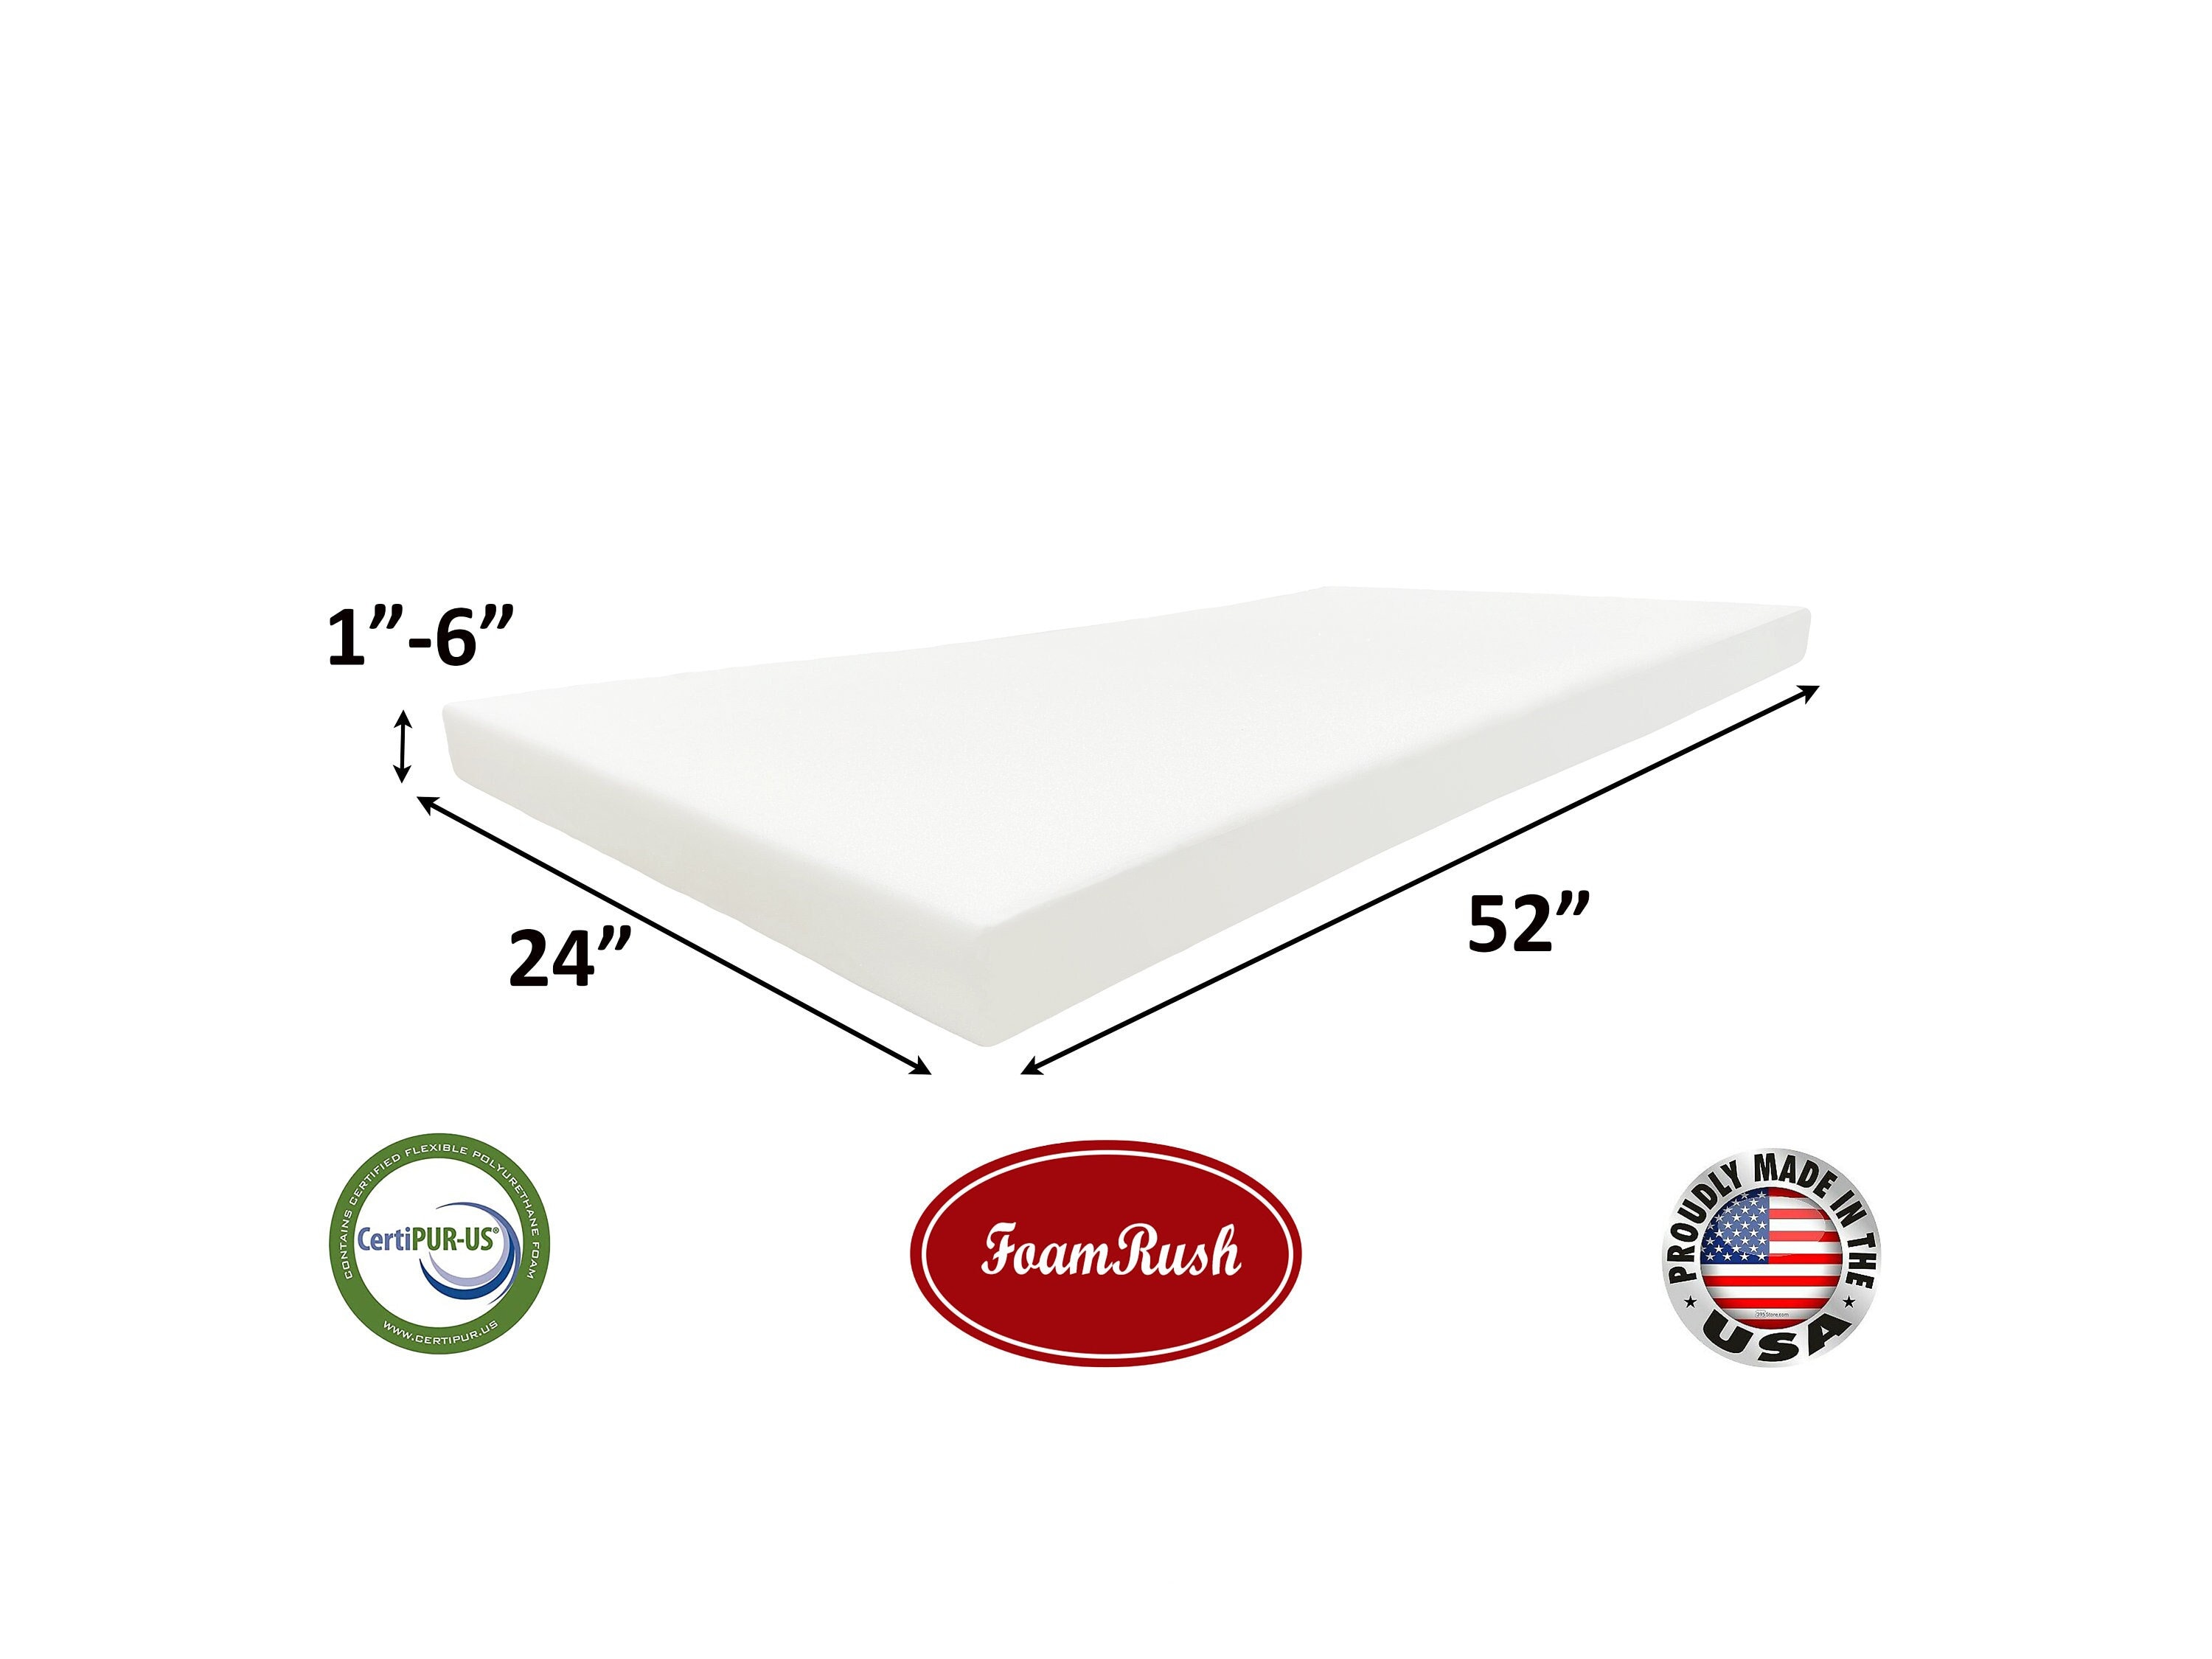 17 Diameter High Density Foam Round – FoamRush